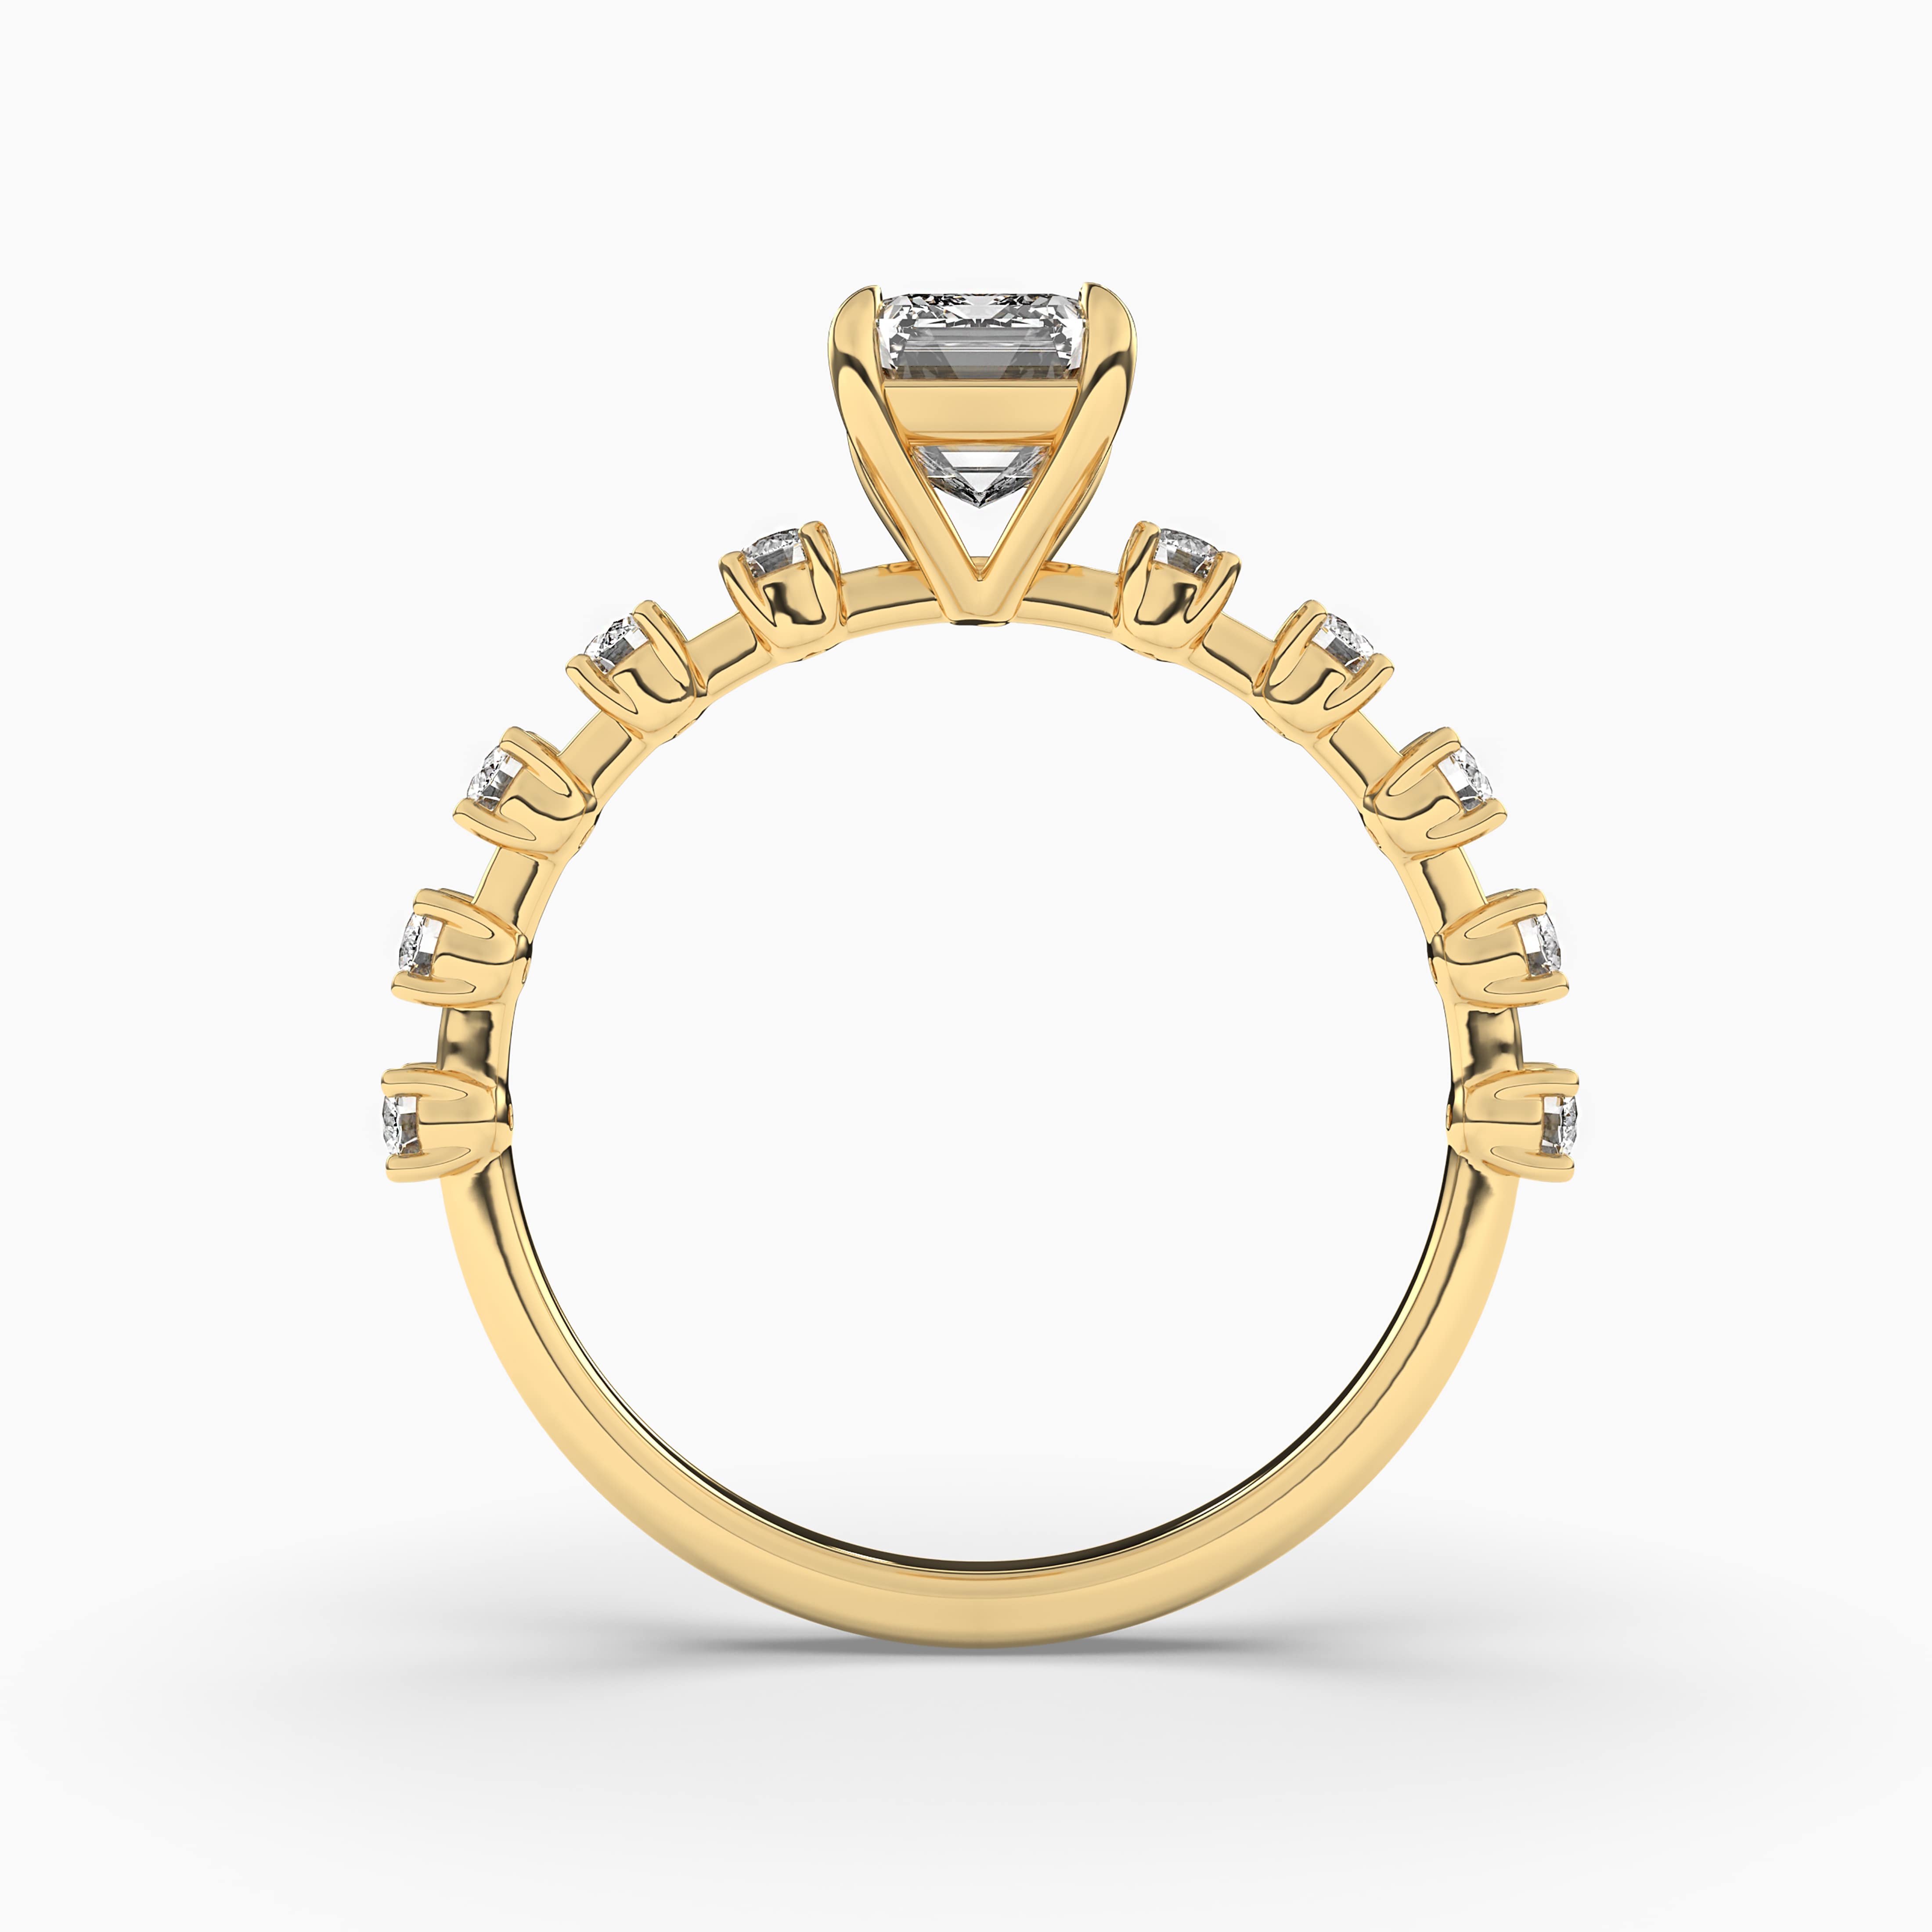 Emerald Cut Amethyst Diamond Ring in Yellow Gold